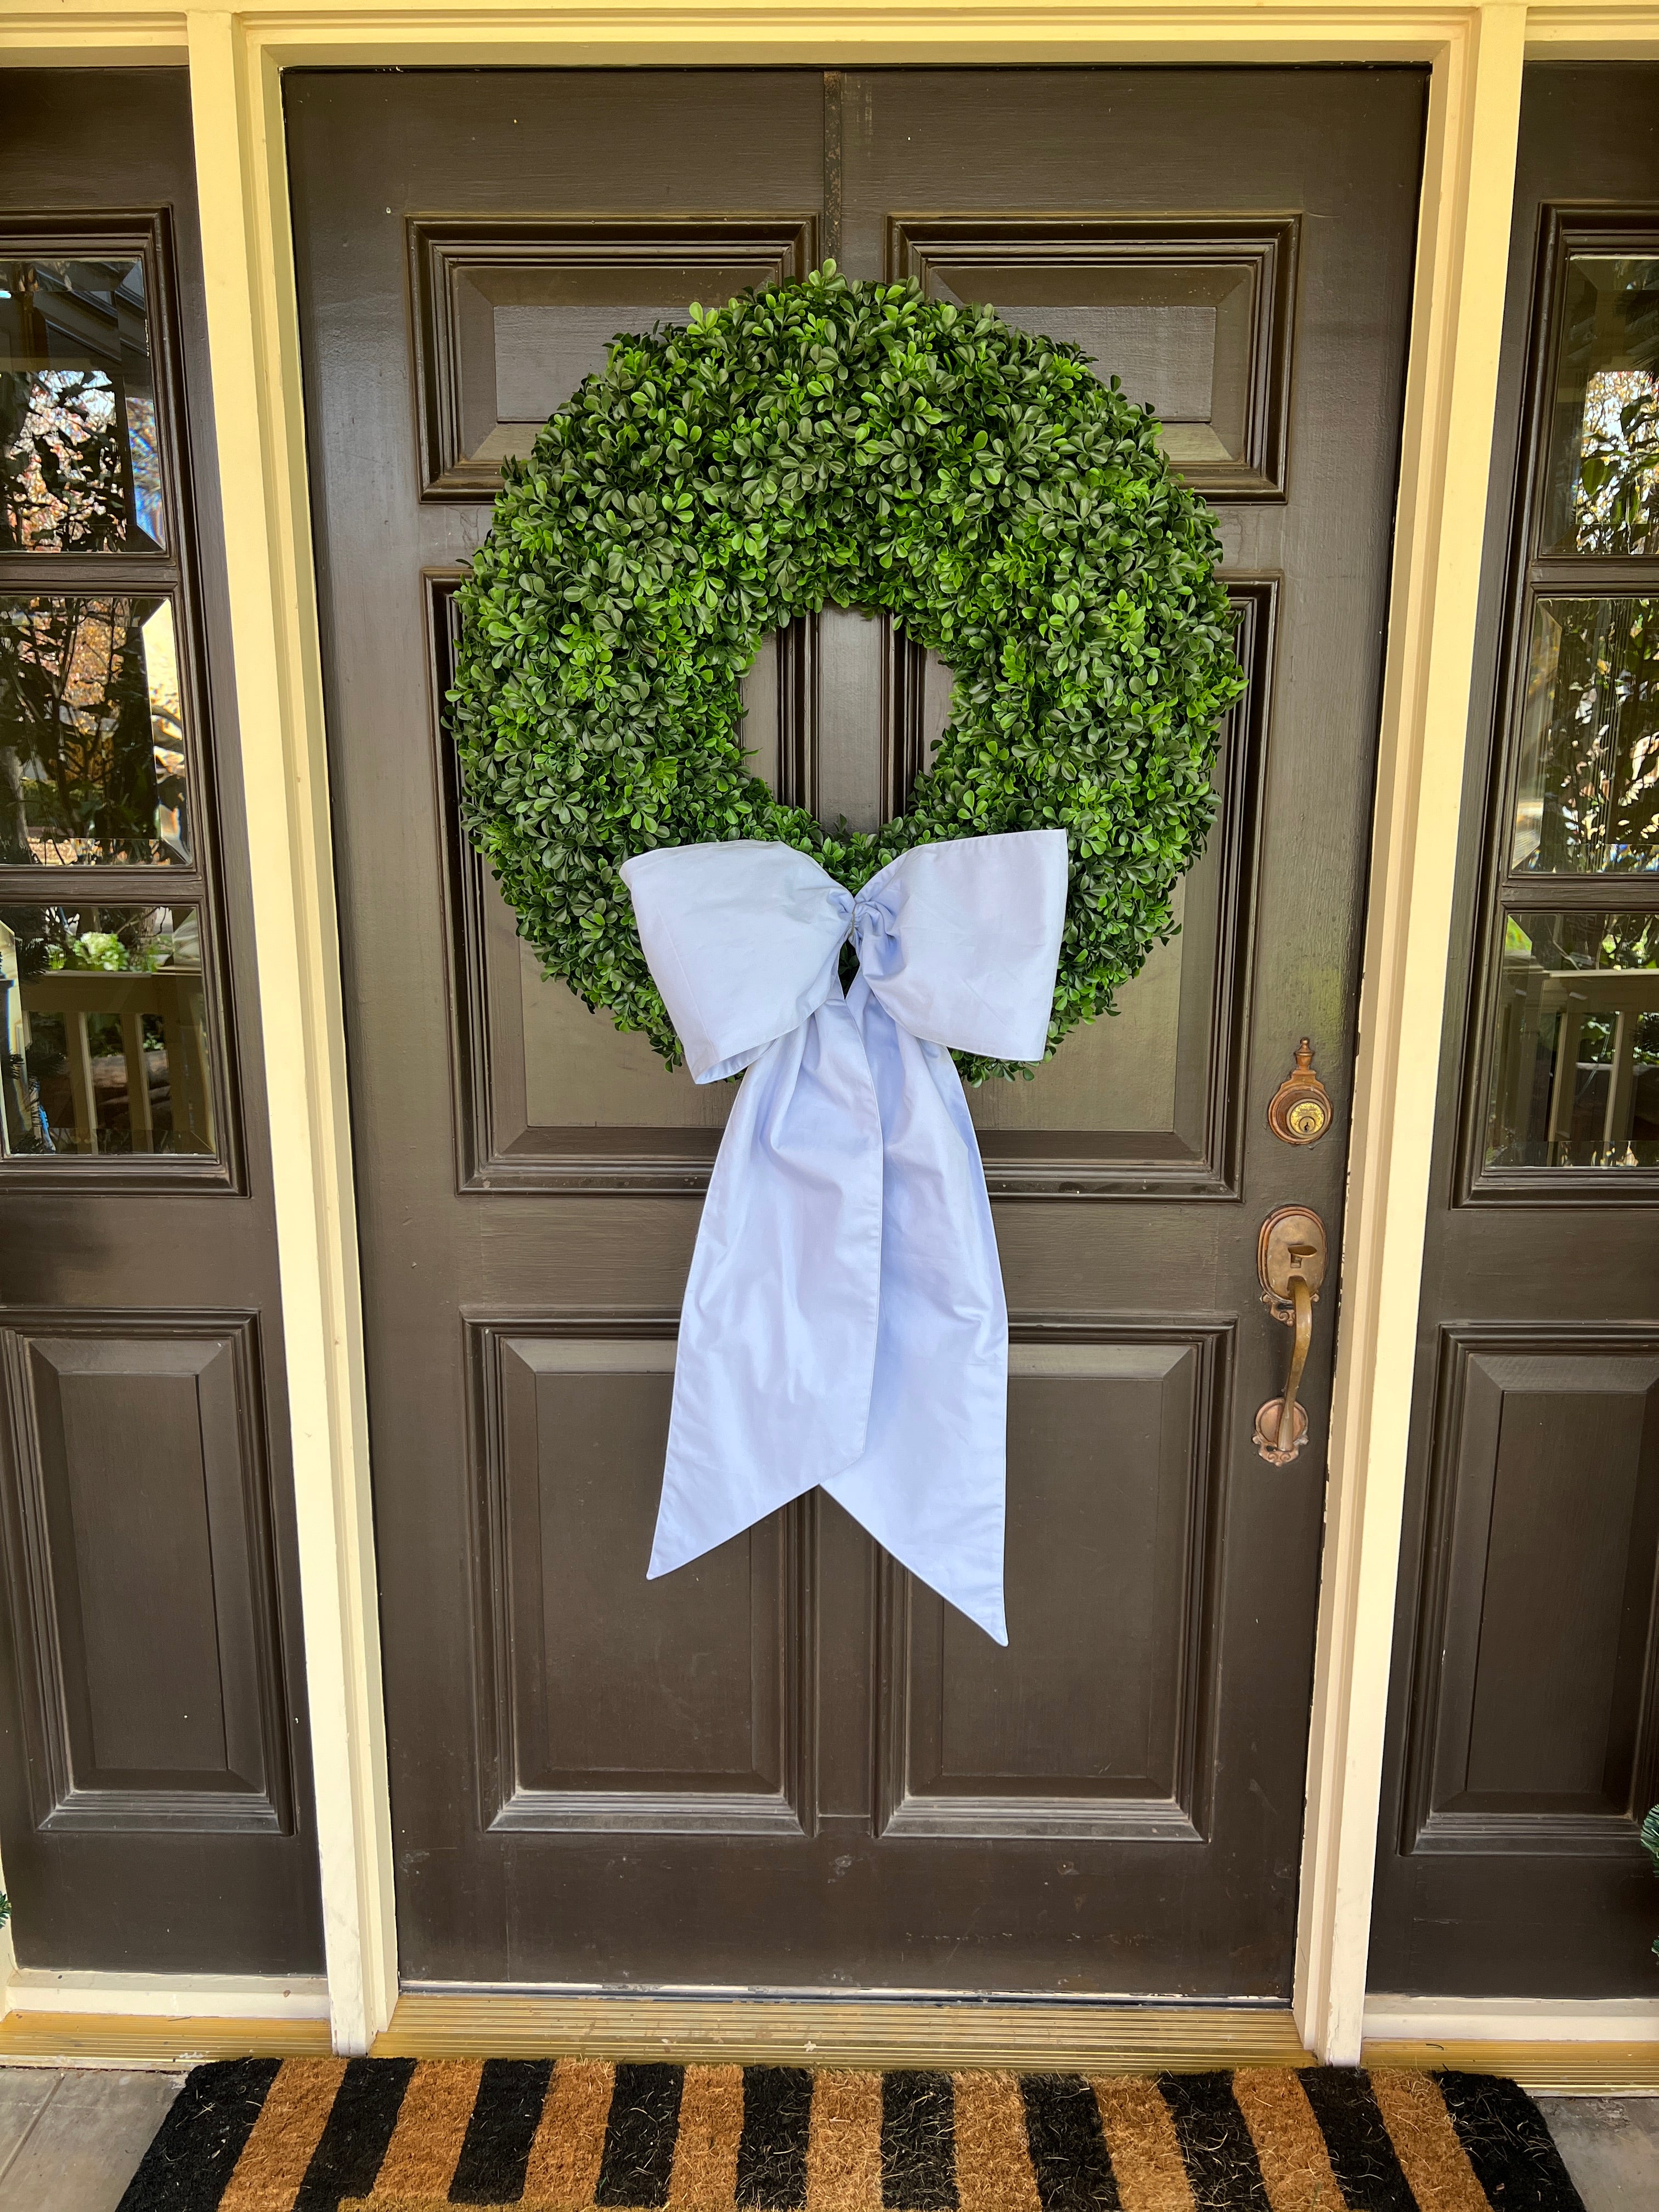 Light blue cotton wreath sash, two sizes, monogram available